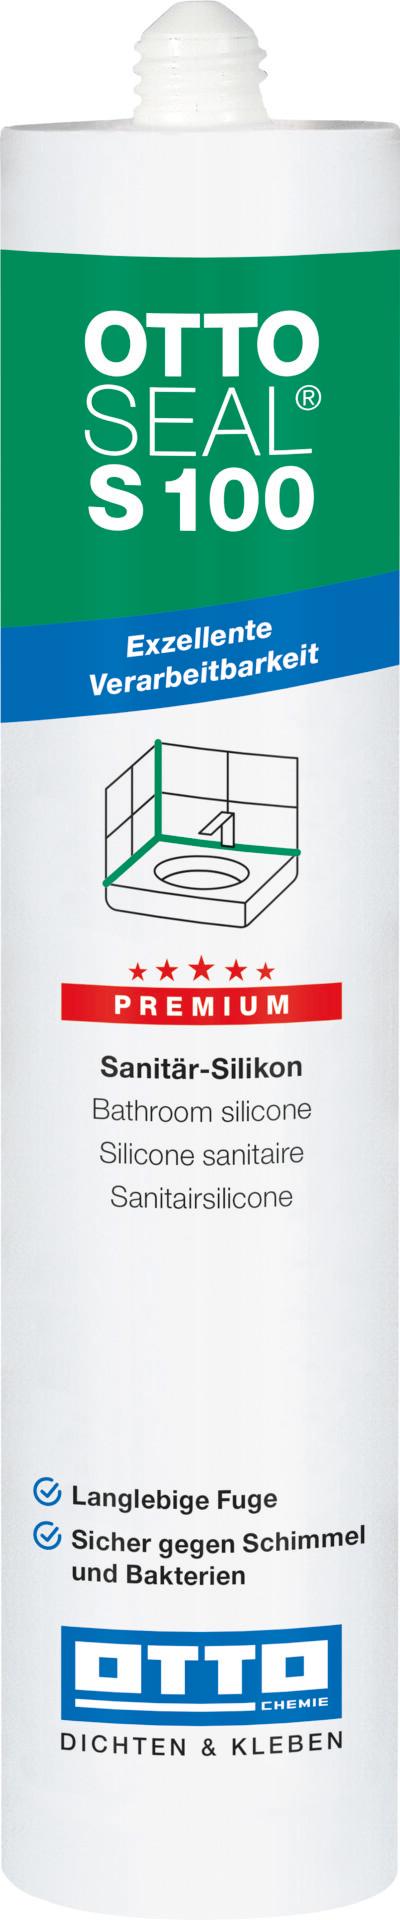 Sanitární silikon OTTOSEAL S100 300 ml